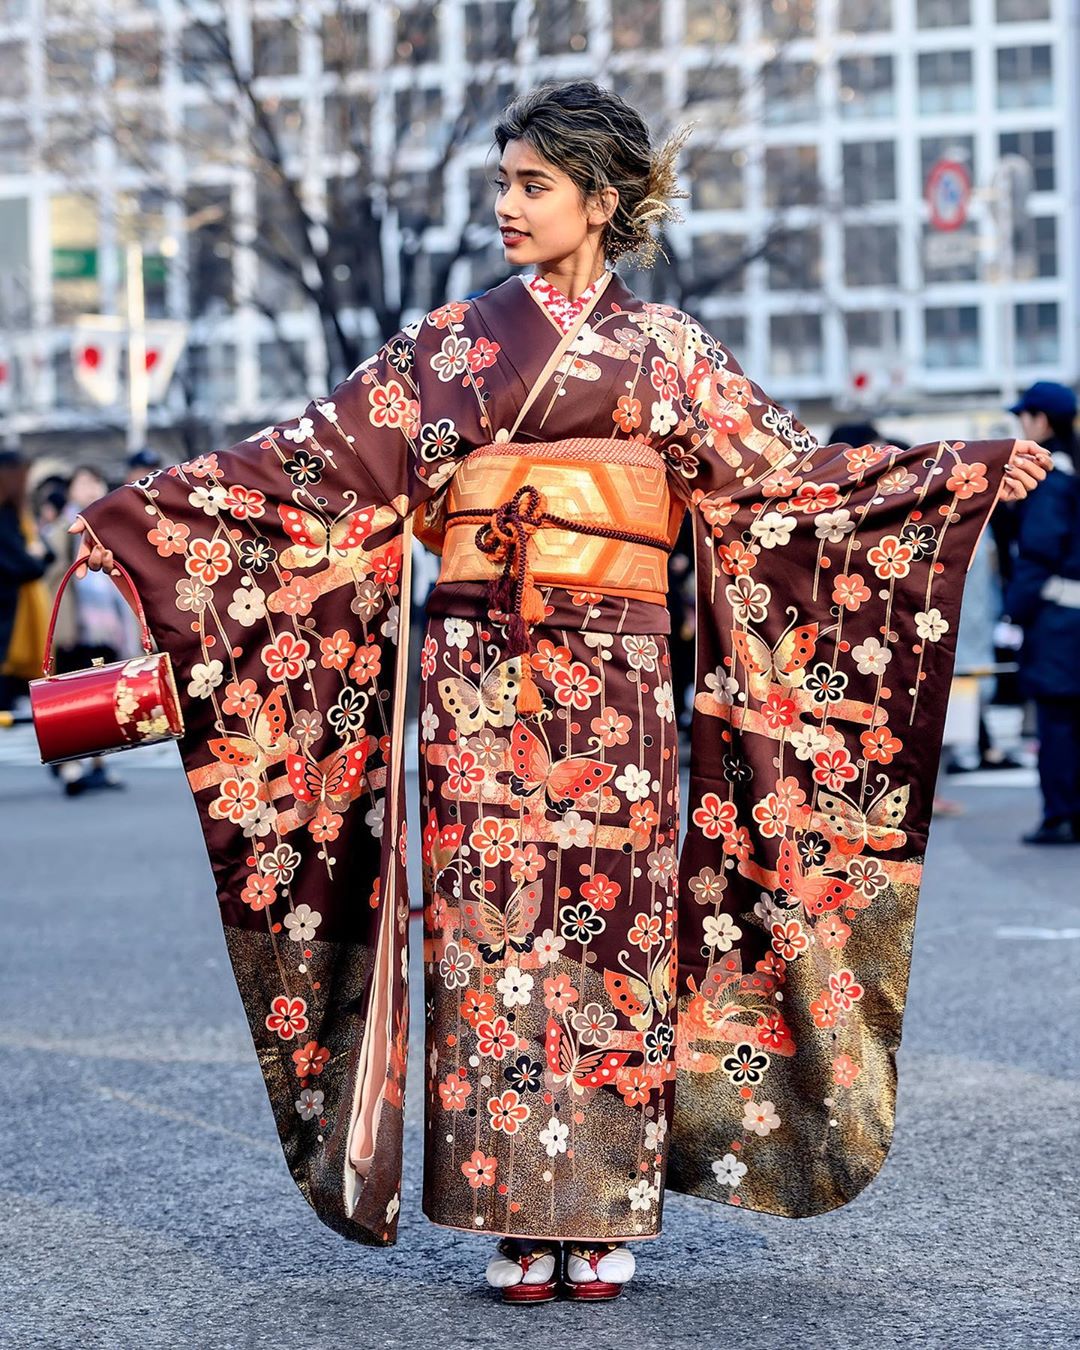 Tokyo Fashion Traditional Japanese Furisode Kimono On The Streets Of Shibuya Tokyo On Japan S